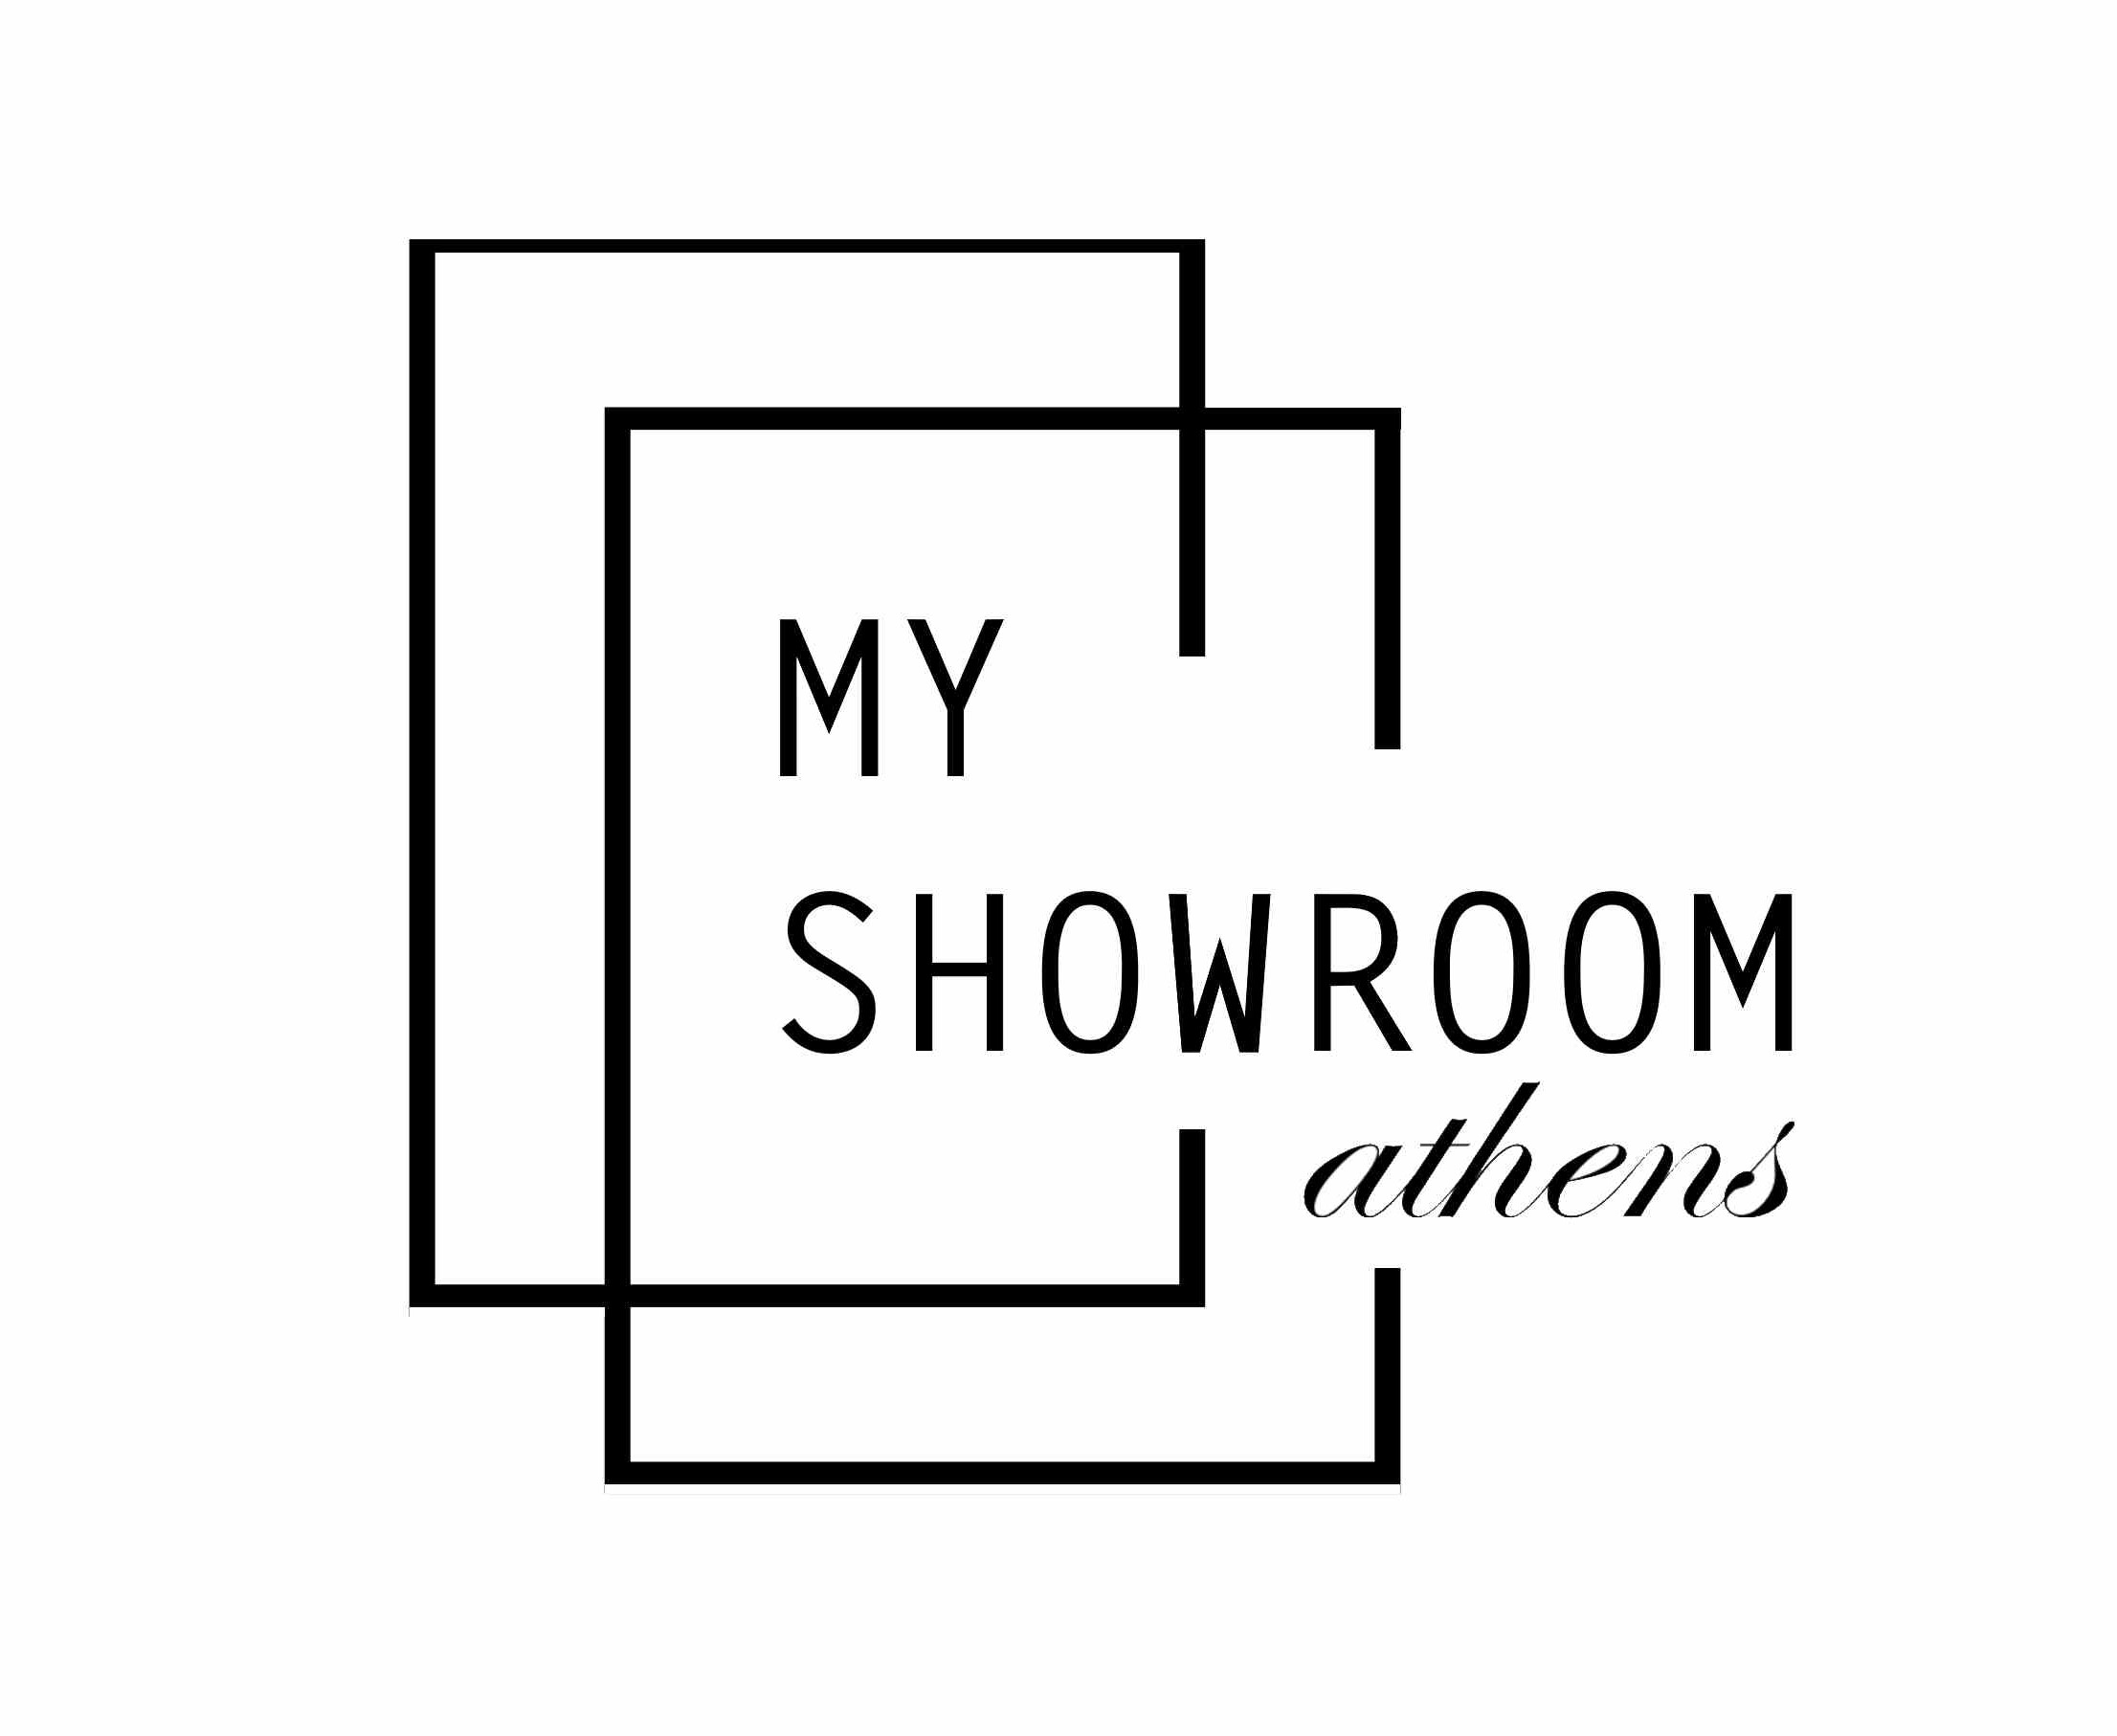 My Showroom Athens